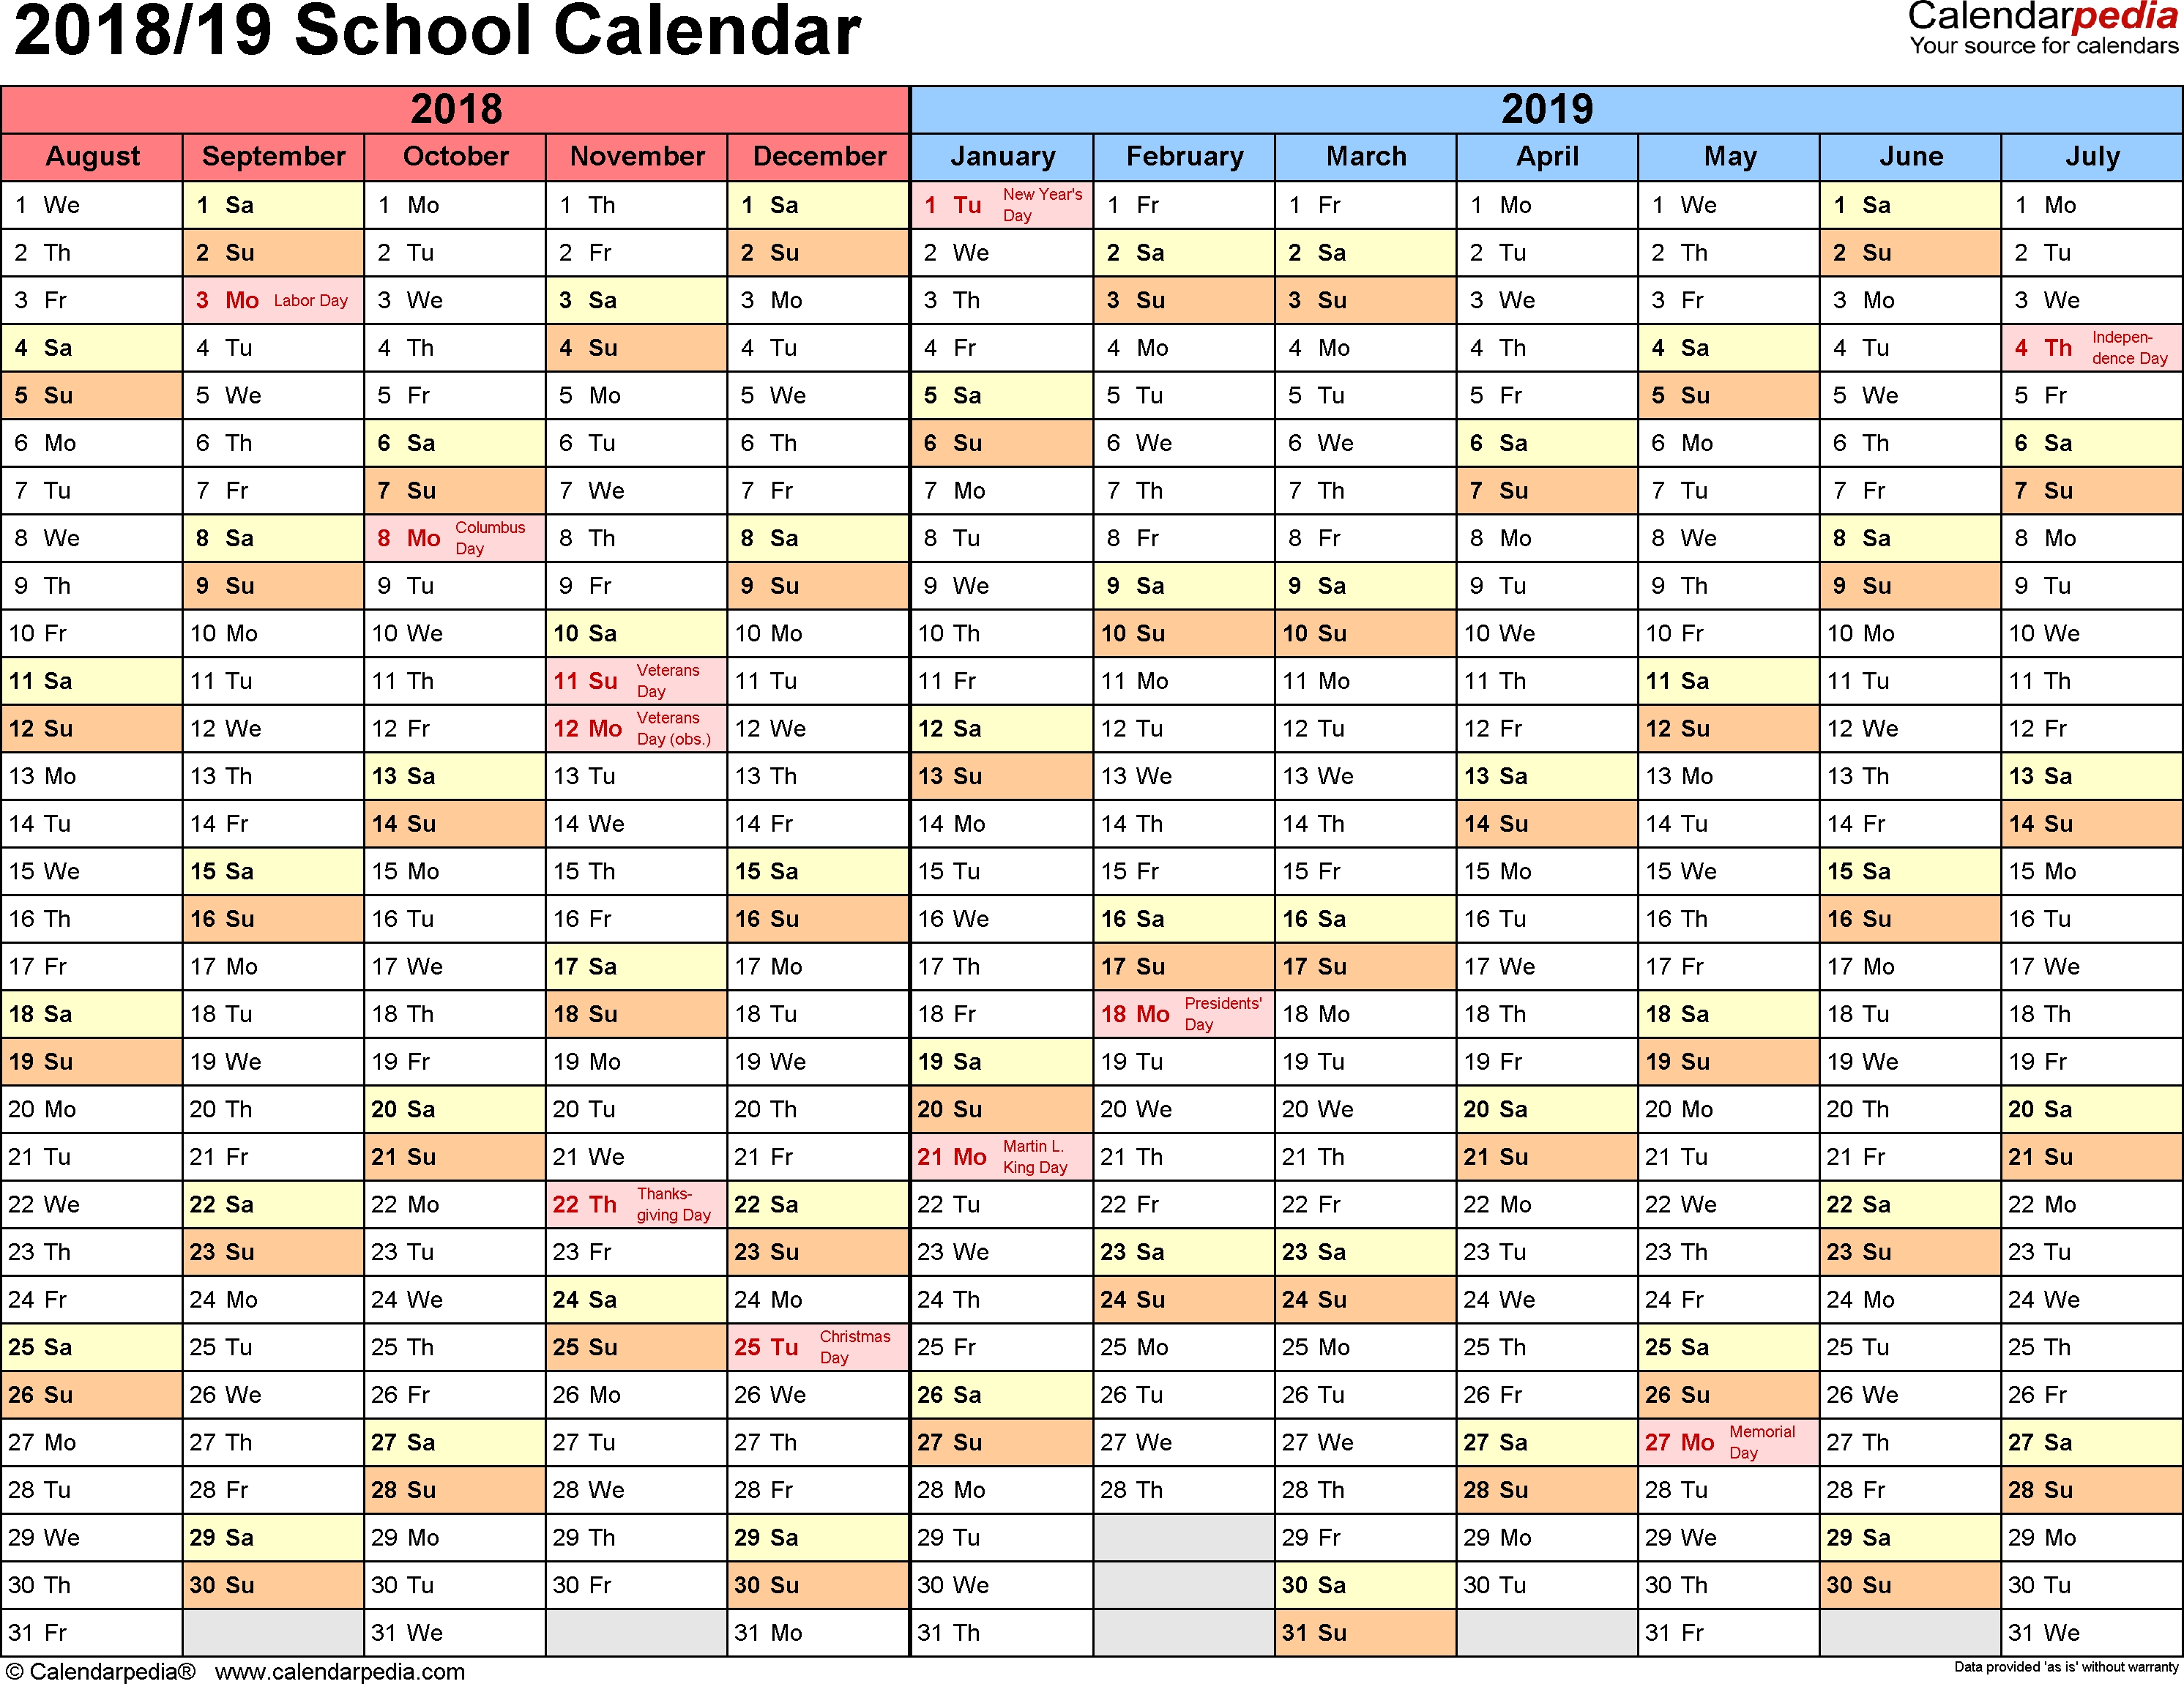 School Calendars 2018/2019 As Free Printable Word Templates Calendar School Year 2019-18 Deped